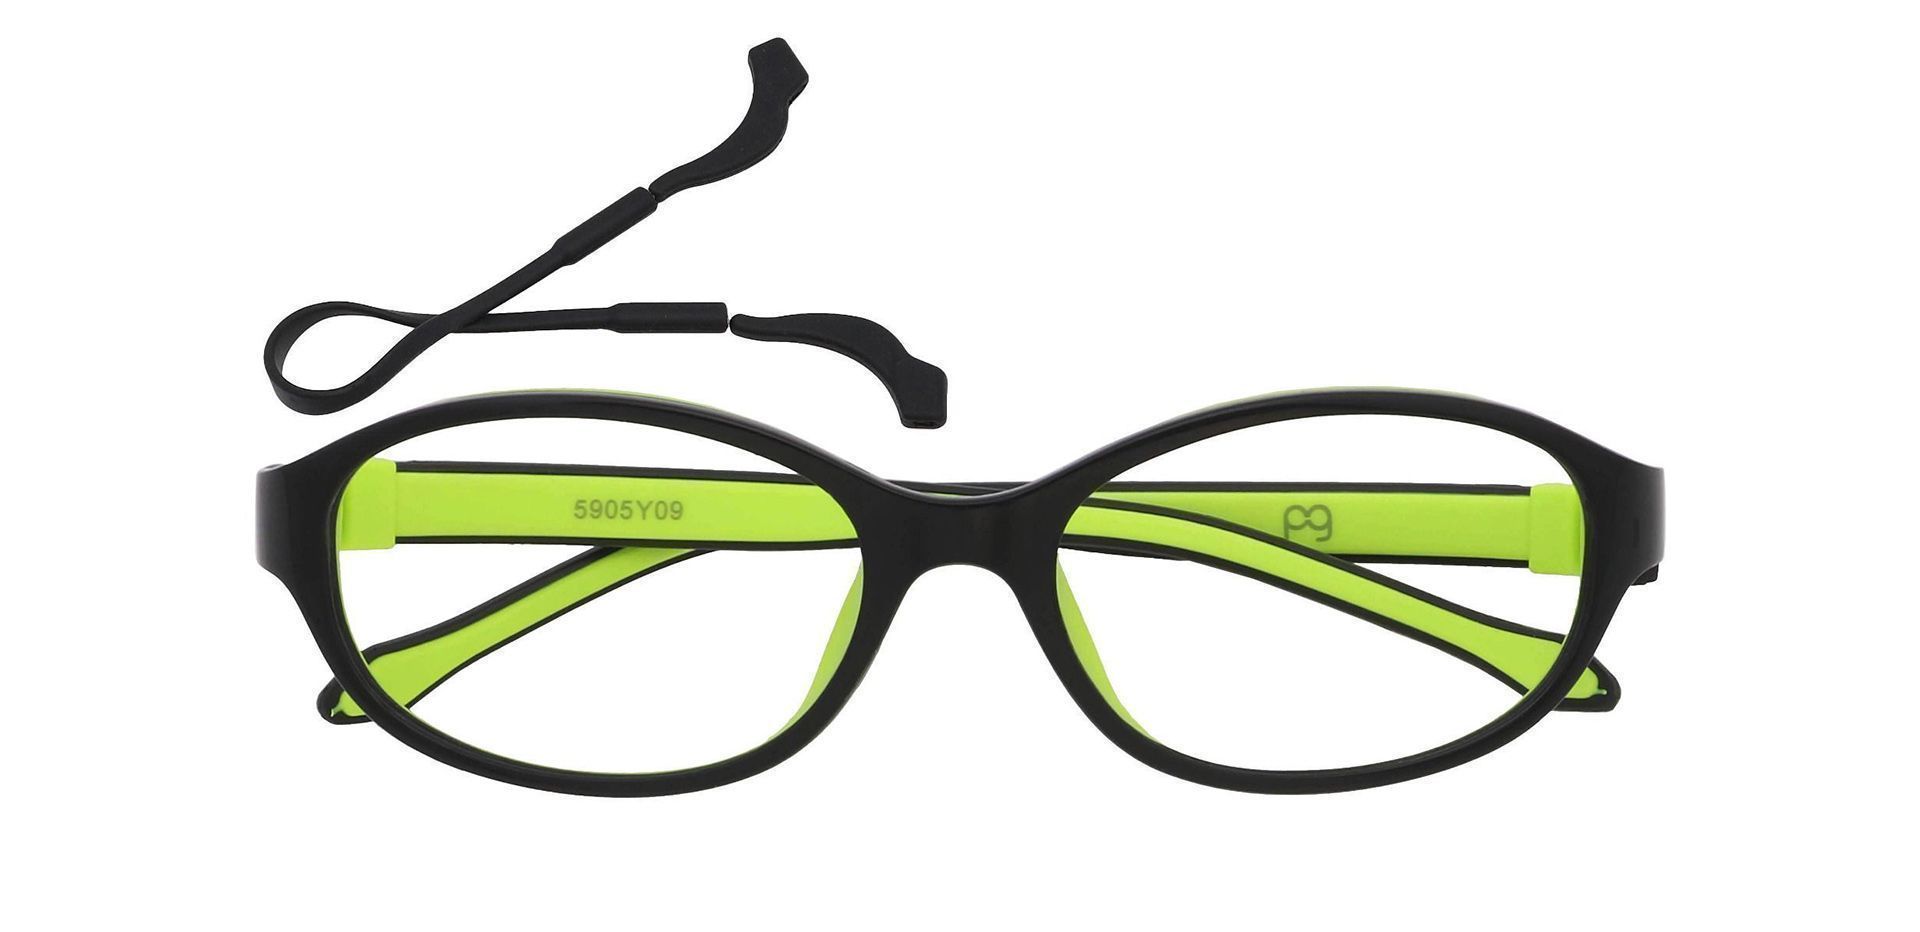 Stone Oval Prescription Glasses - Black/lime Green